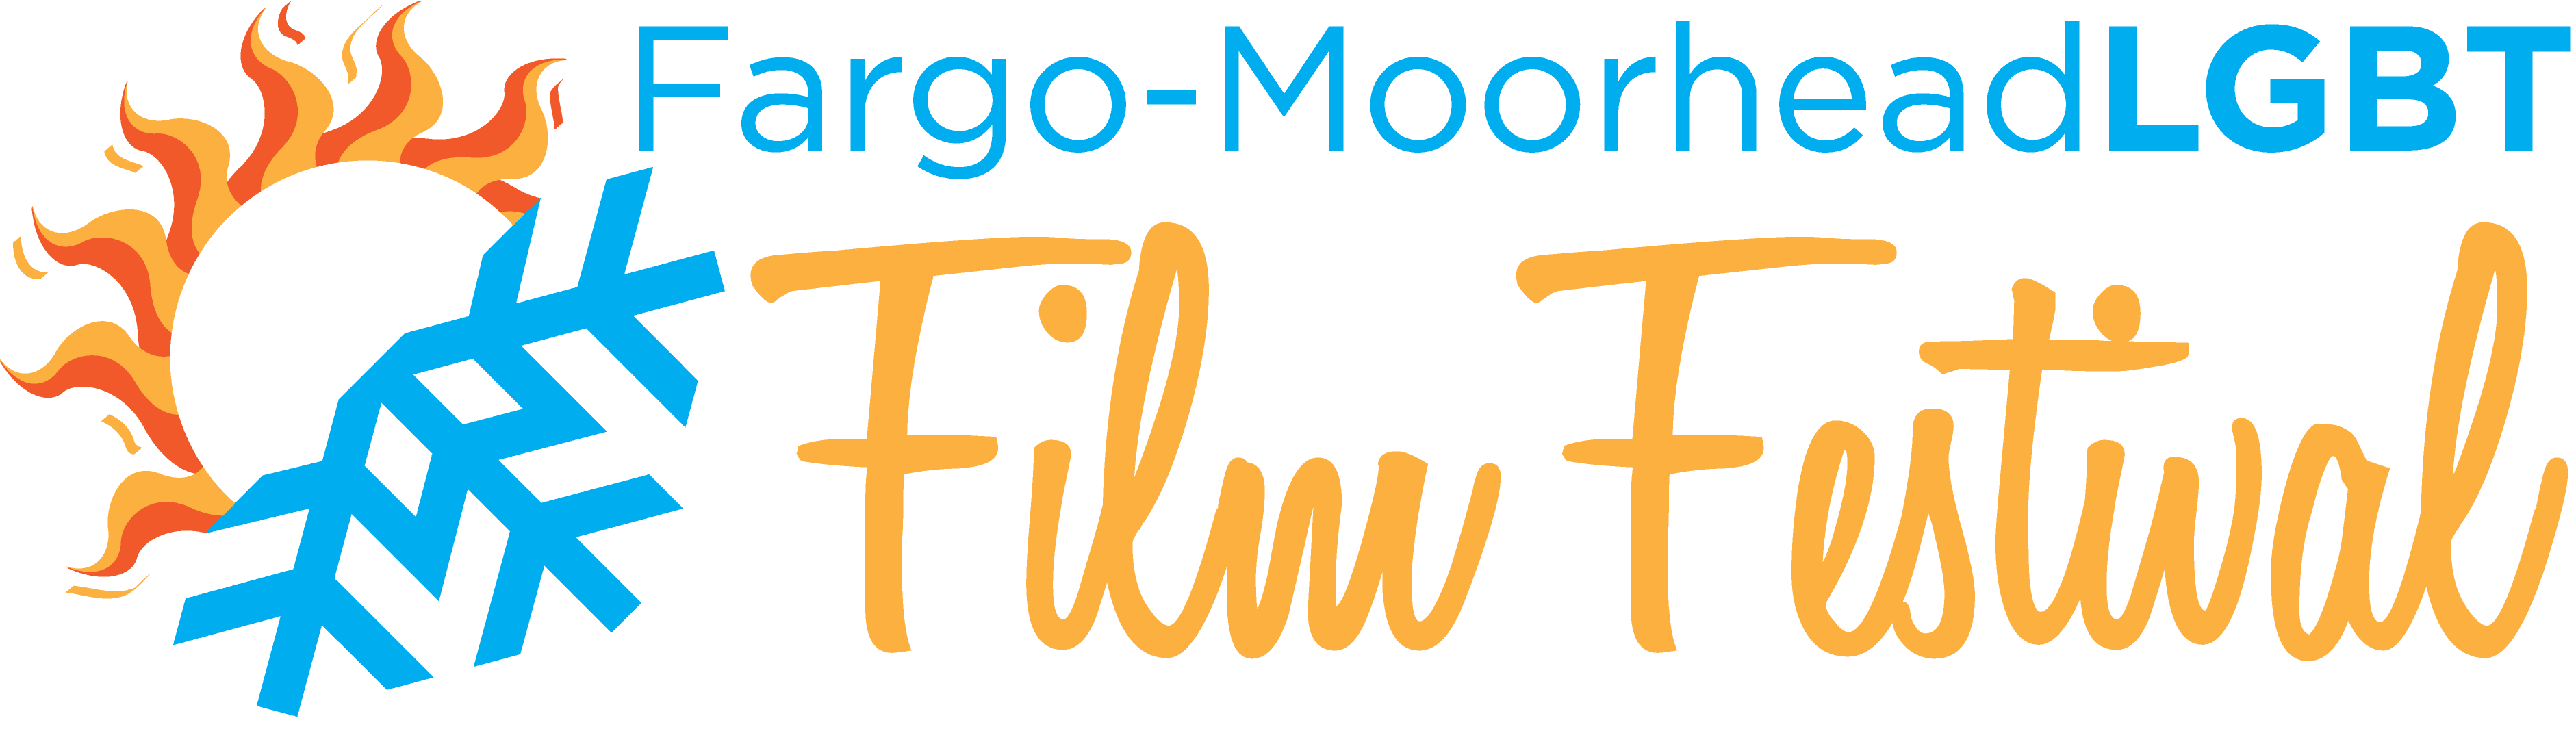 Fargo-Moorhead LGBT Film Festival